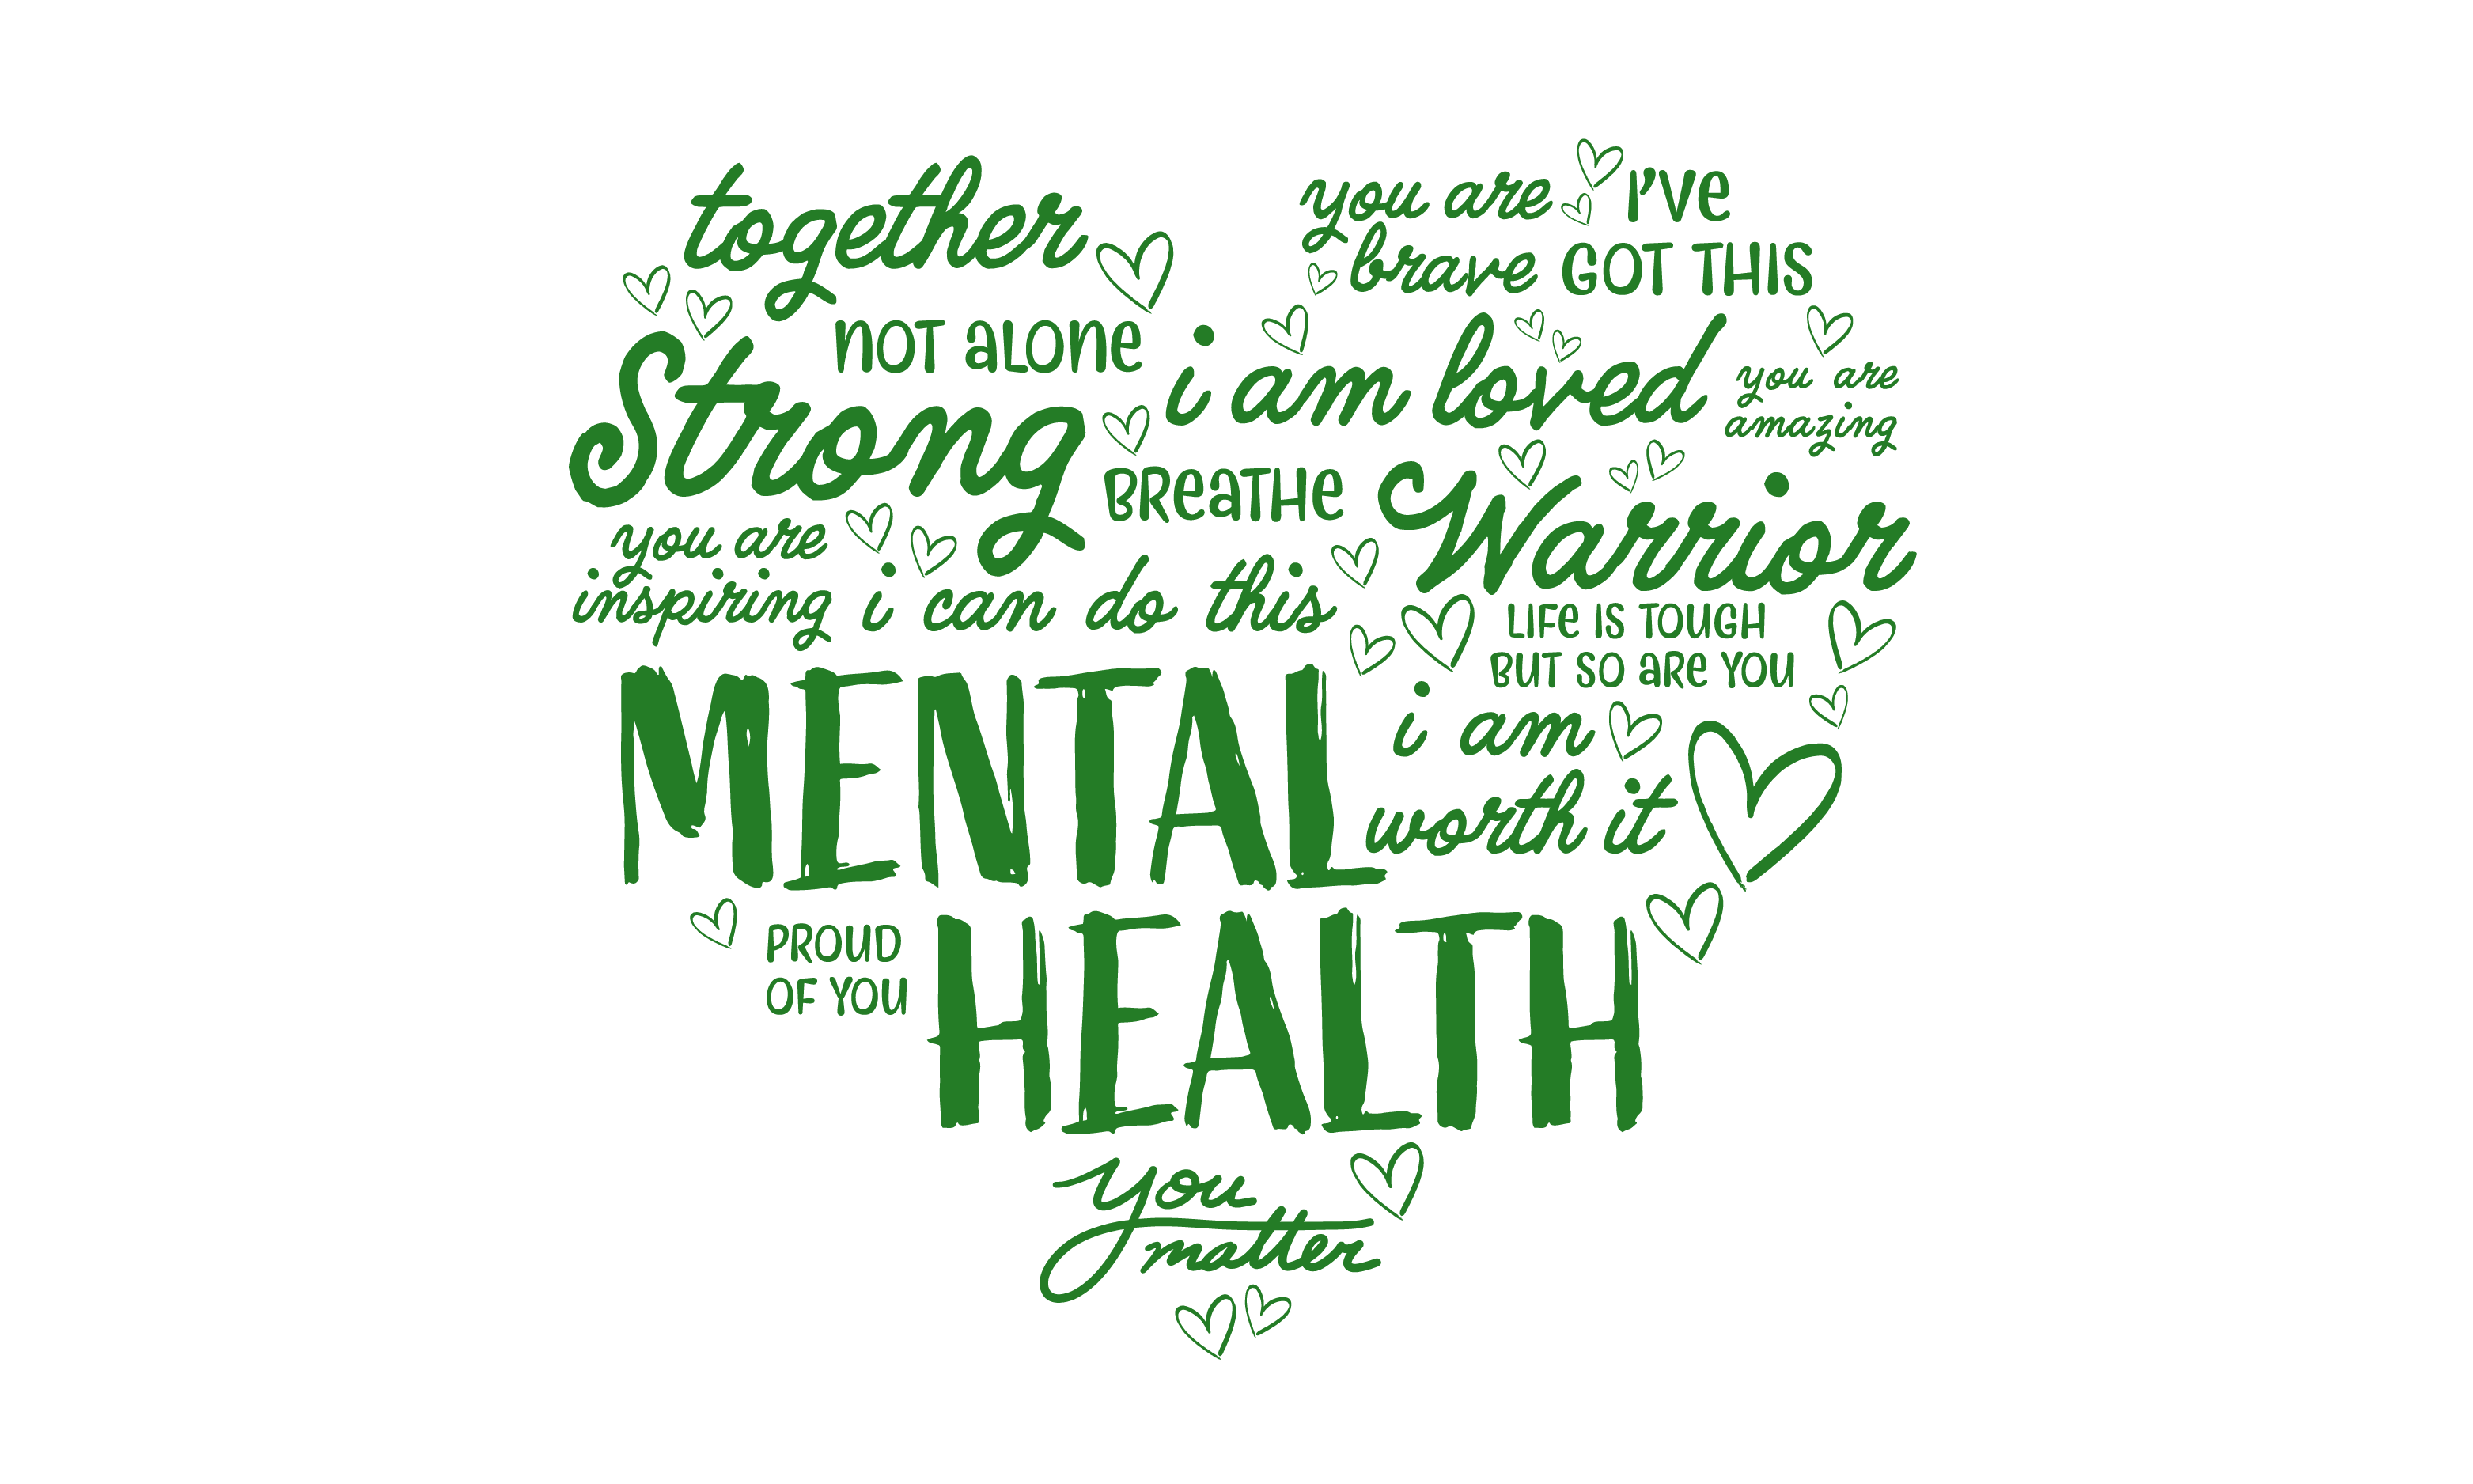 UPH Waterloo - Mental Health Matters